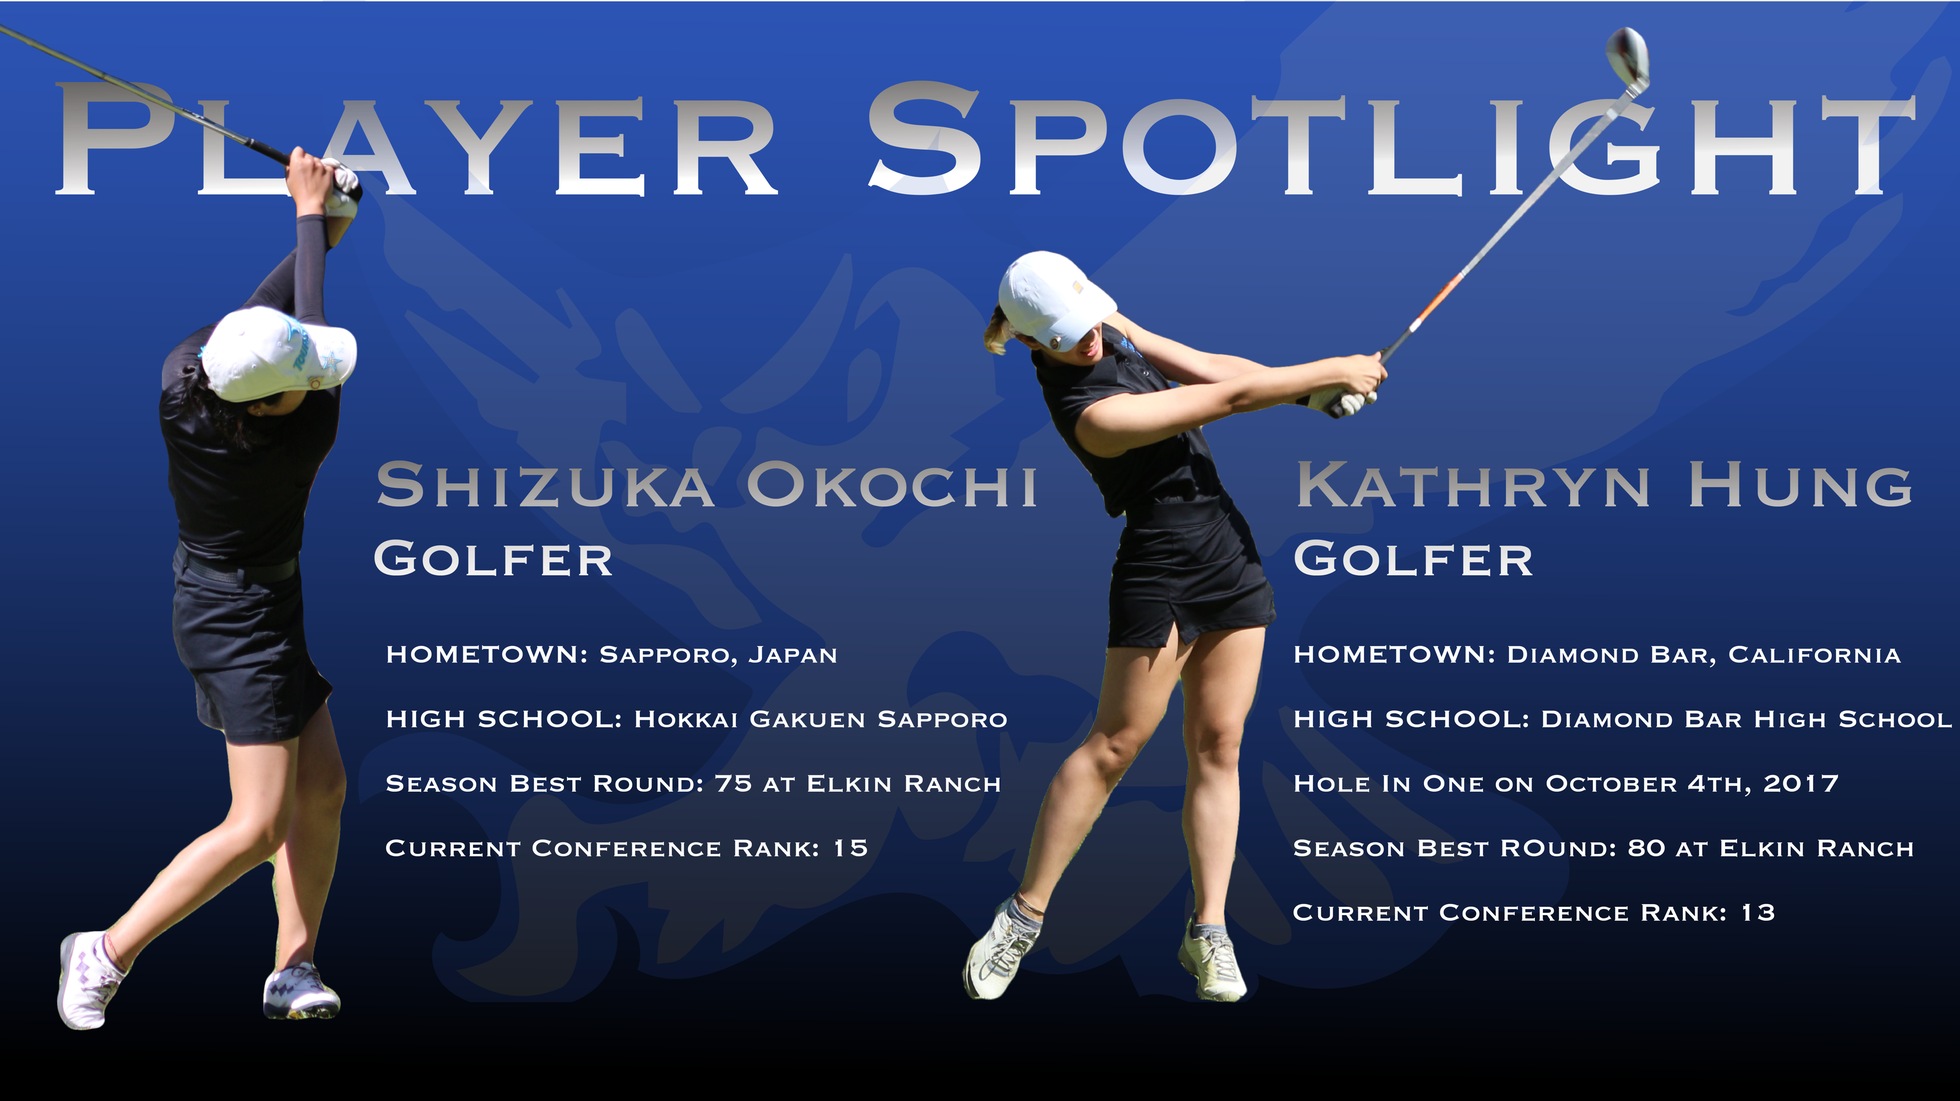 Player Spotlight: Shizuka Okochi and Kathryn Hung